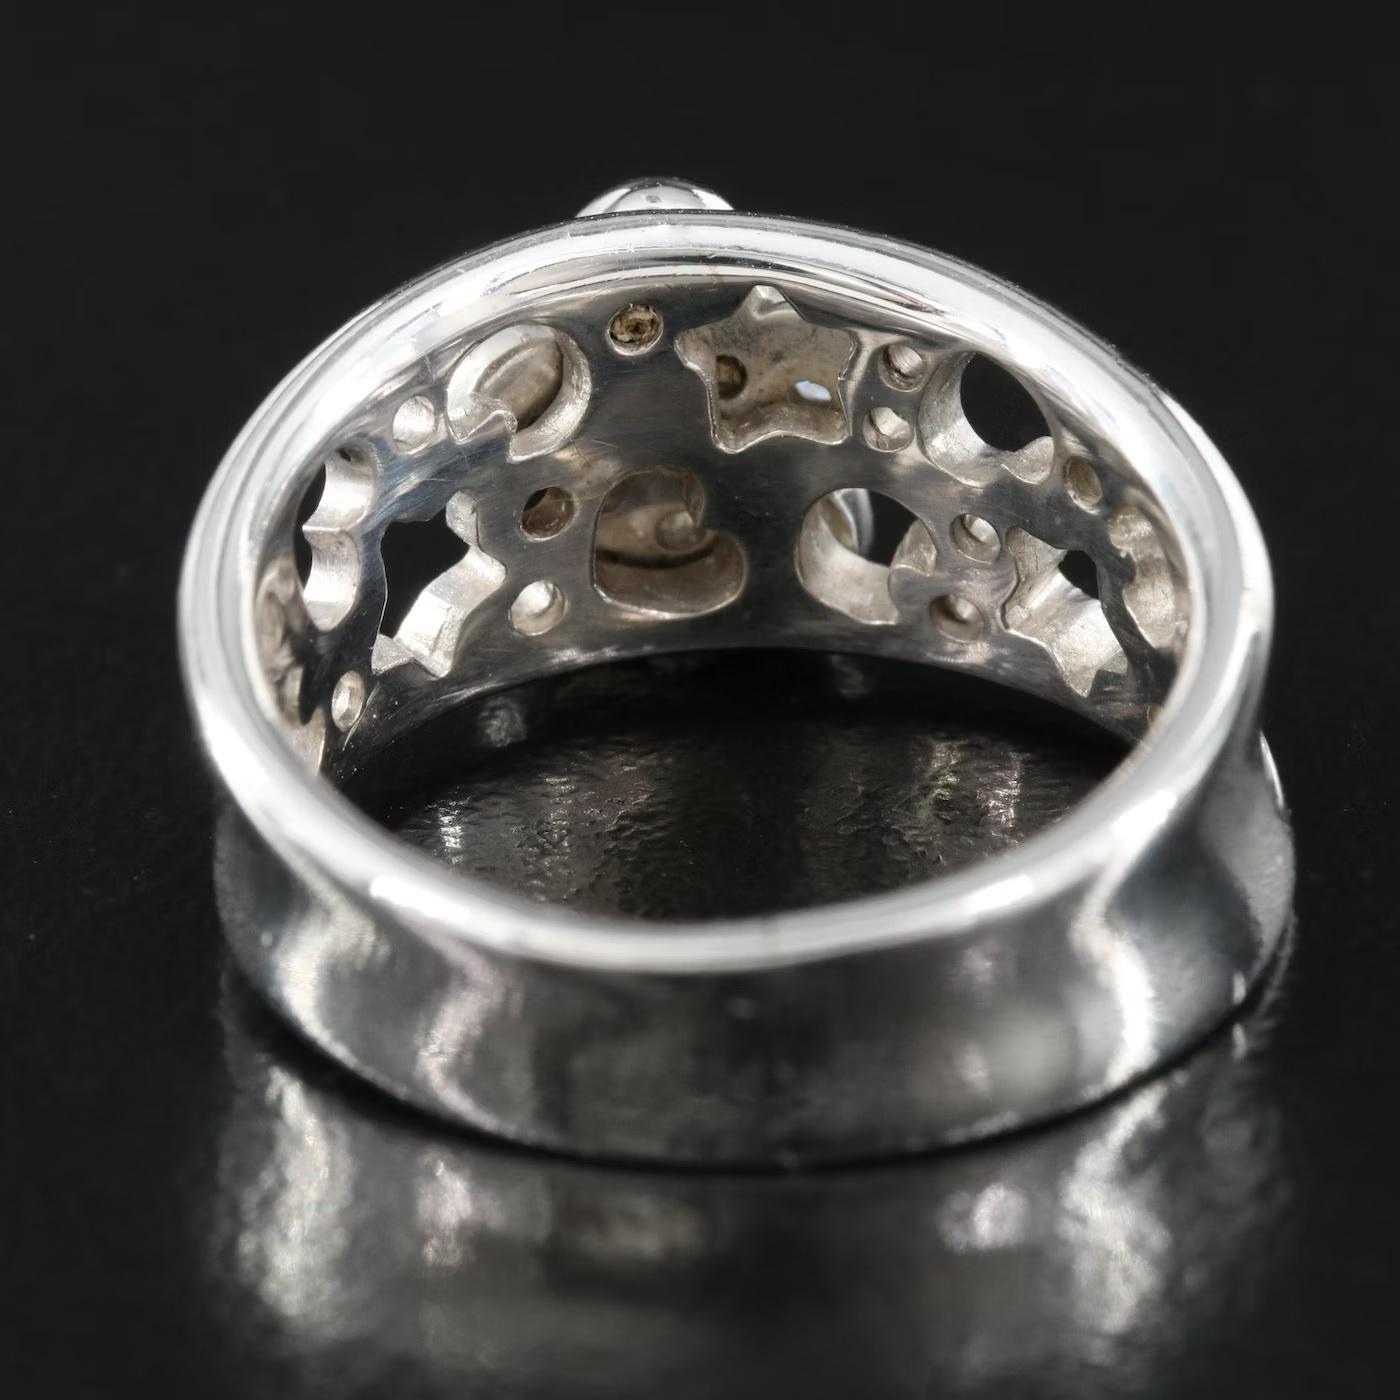 $9750 / NEW / PASQUALE BRUNI - ITALY designer Flower Diamond Ring / 18K Gold 1